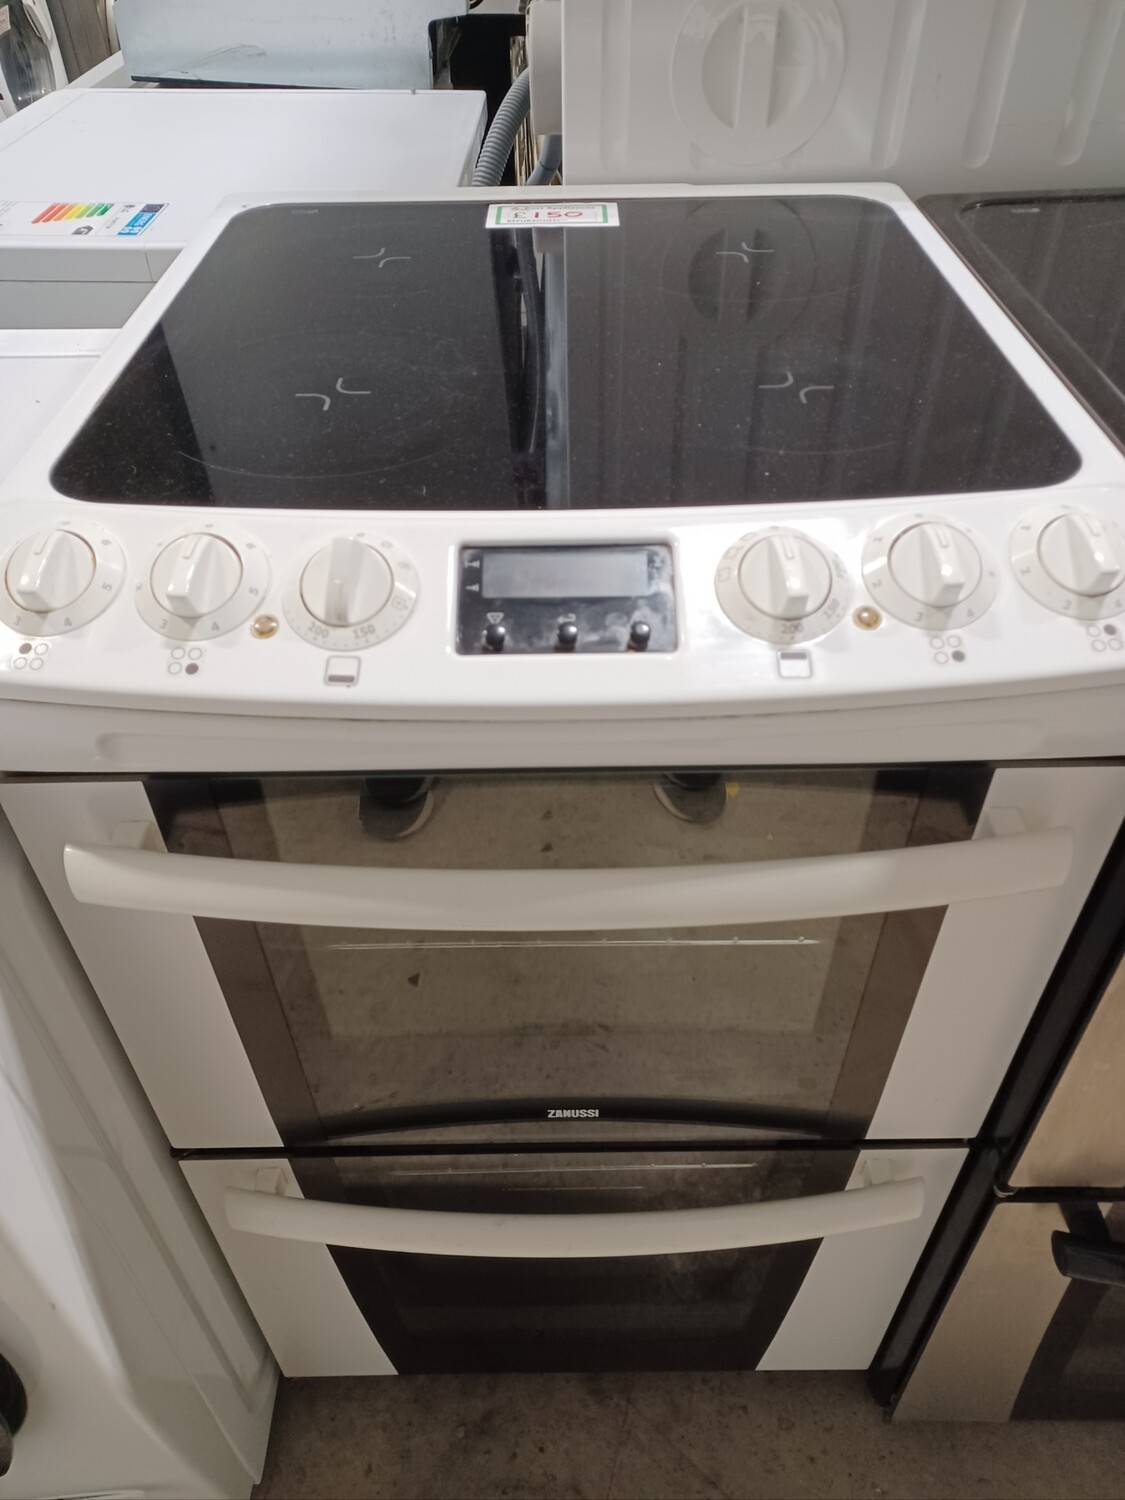 Zanussi 55cm electric double oven ceramic hob cooker refurbished 6-month guarantee